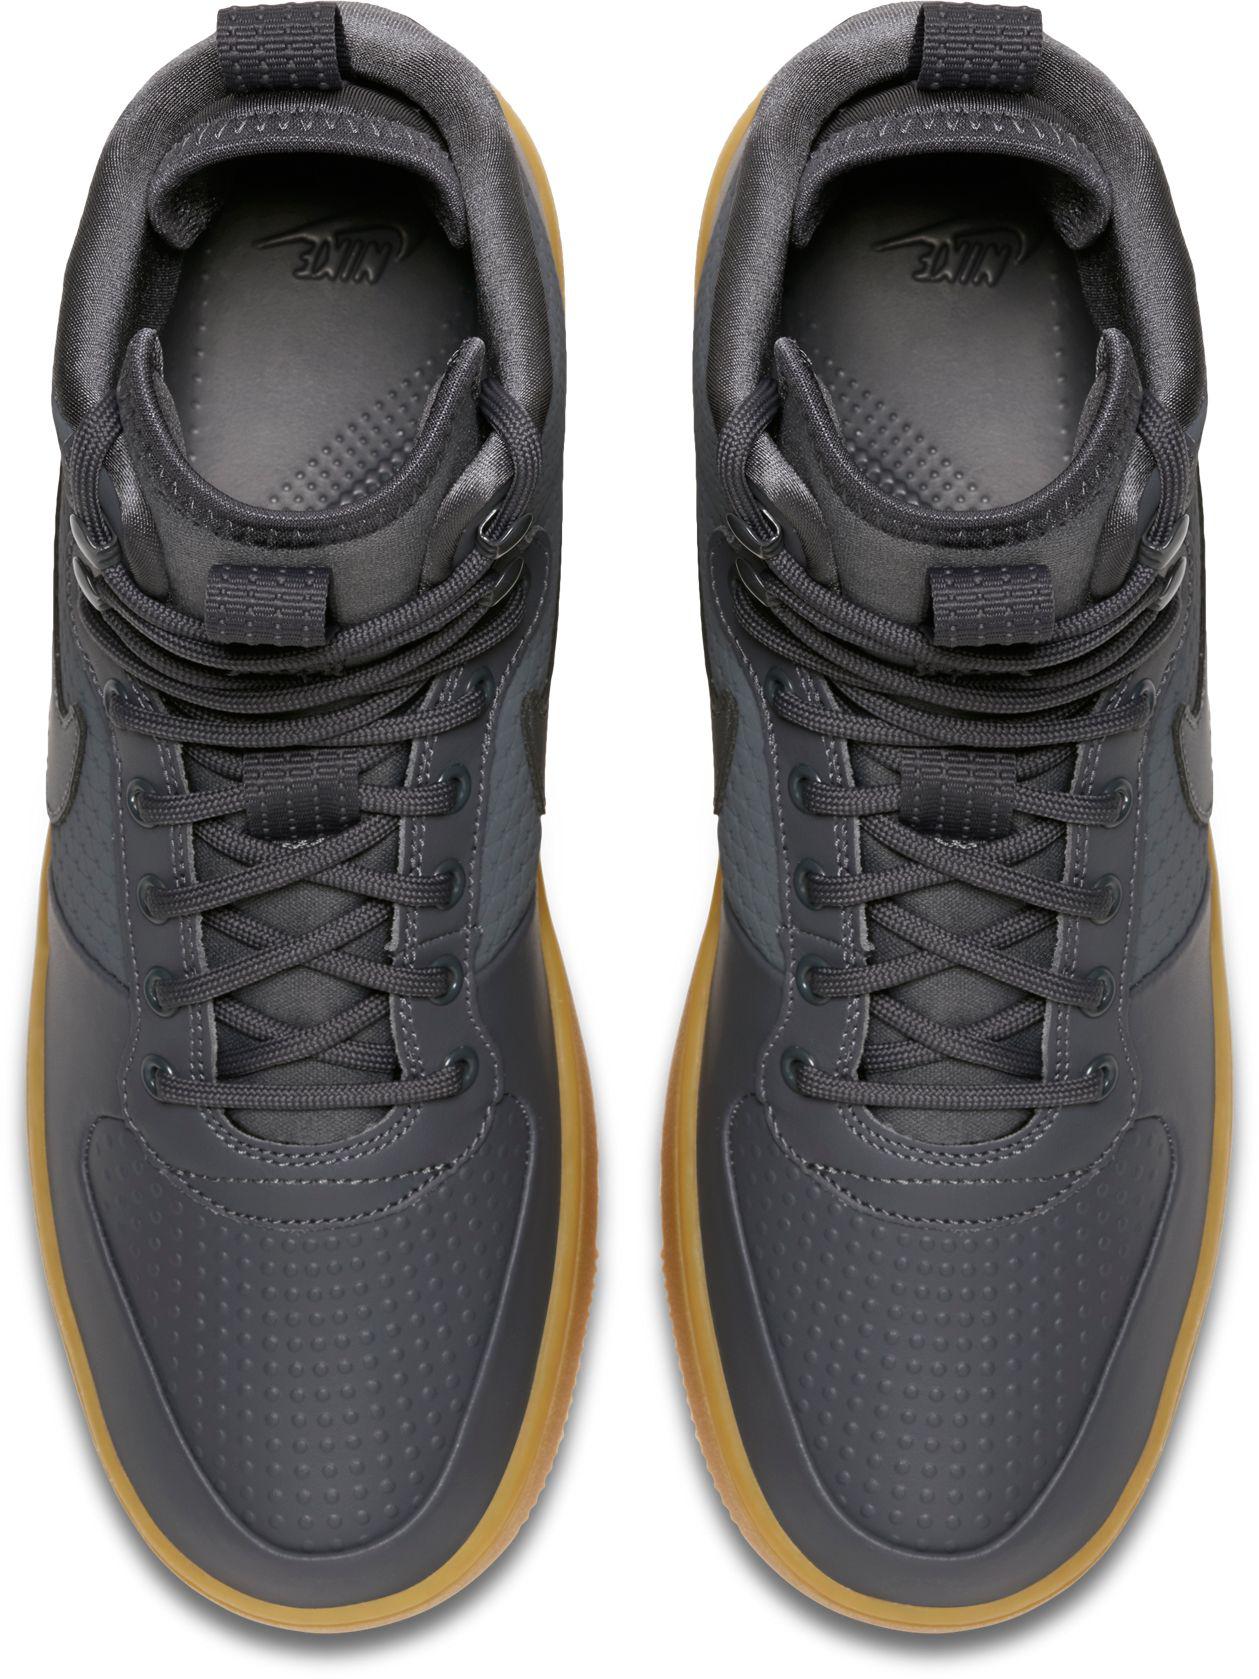 Nike Neoprene Court Borough Mid Winter Shoes in Dark Grey (Gray) for Men |  Lyst